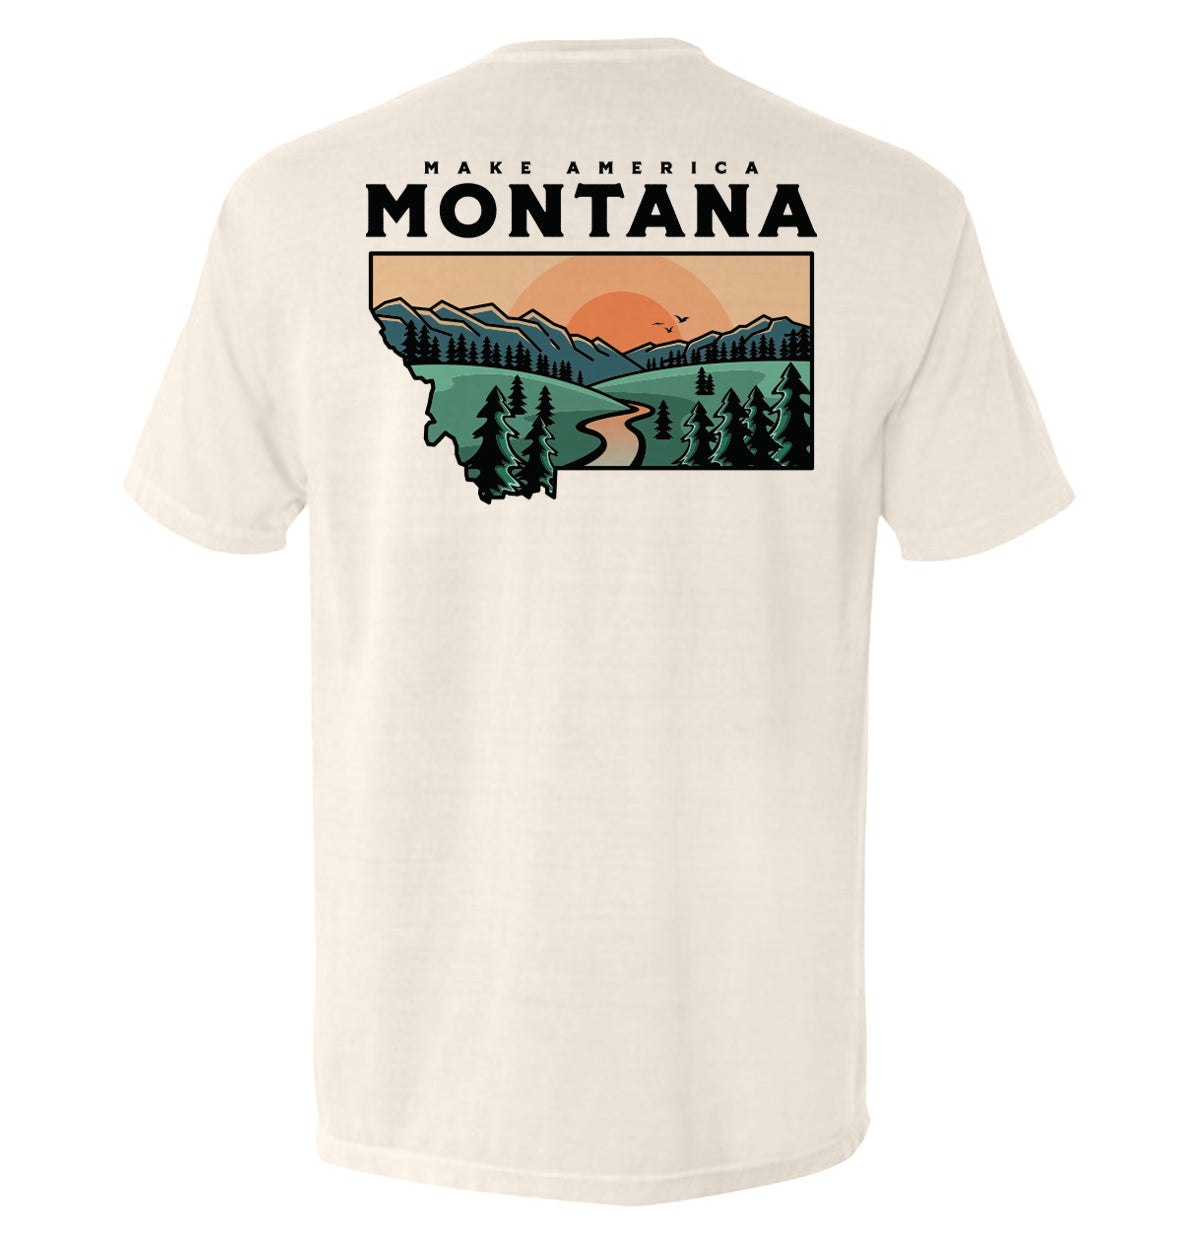 Make America Montana